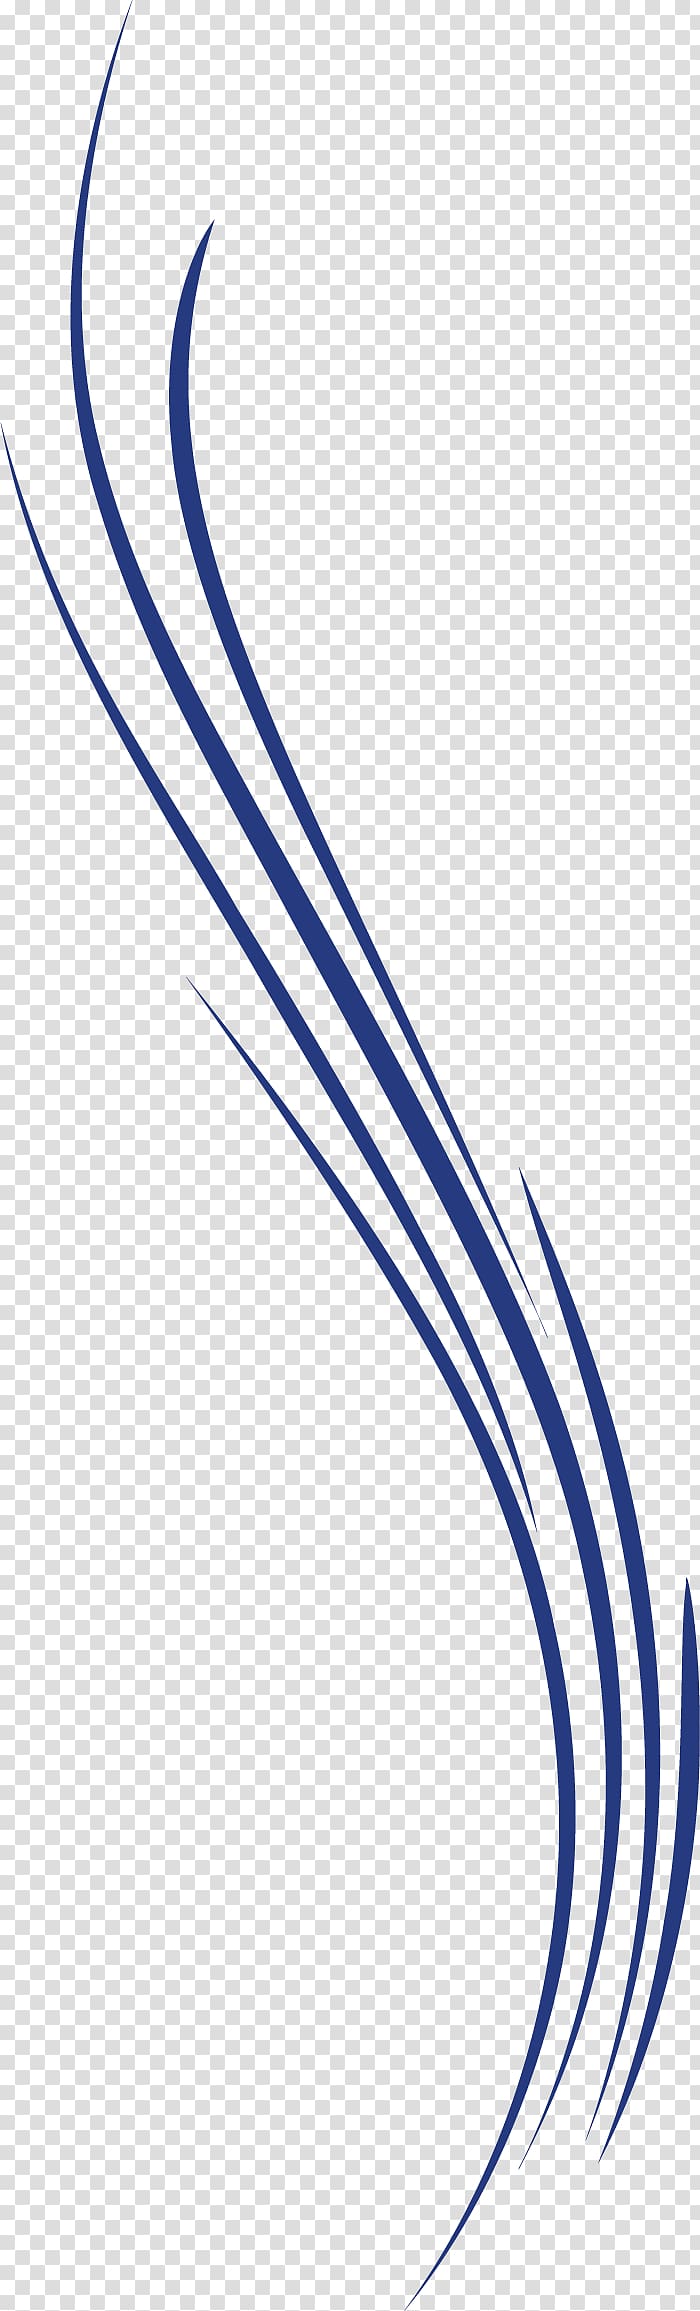 Curve Line Euclidean , Blue curve, blue curved slash illustration transparent background PNG clipart